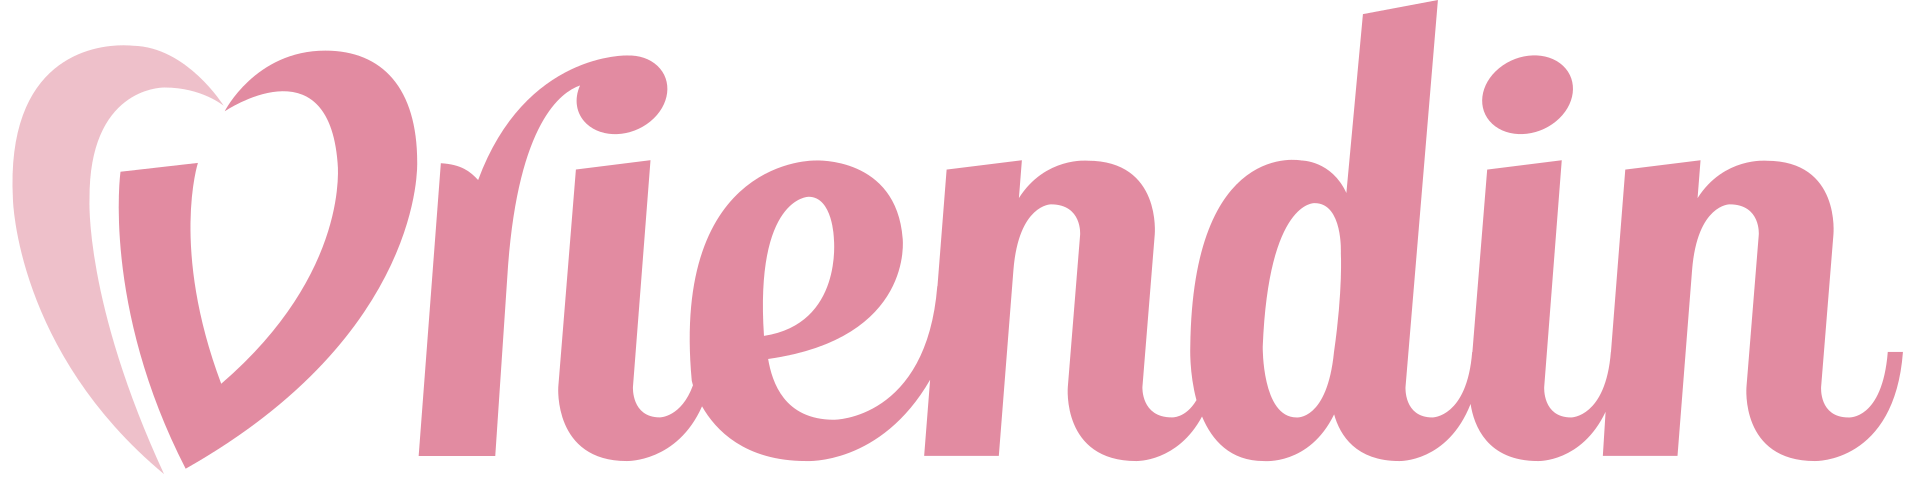 Logo Vriendin - Rosalinda Weel